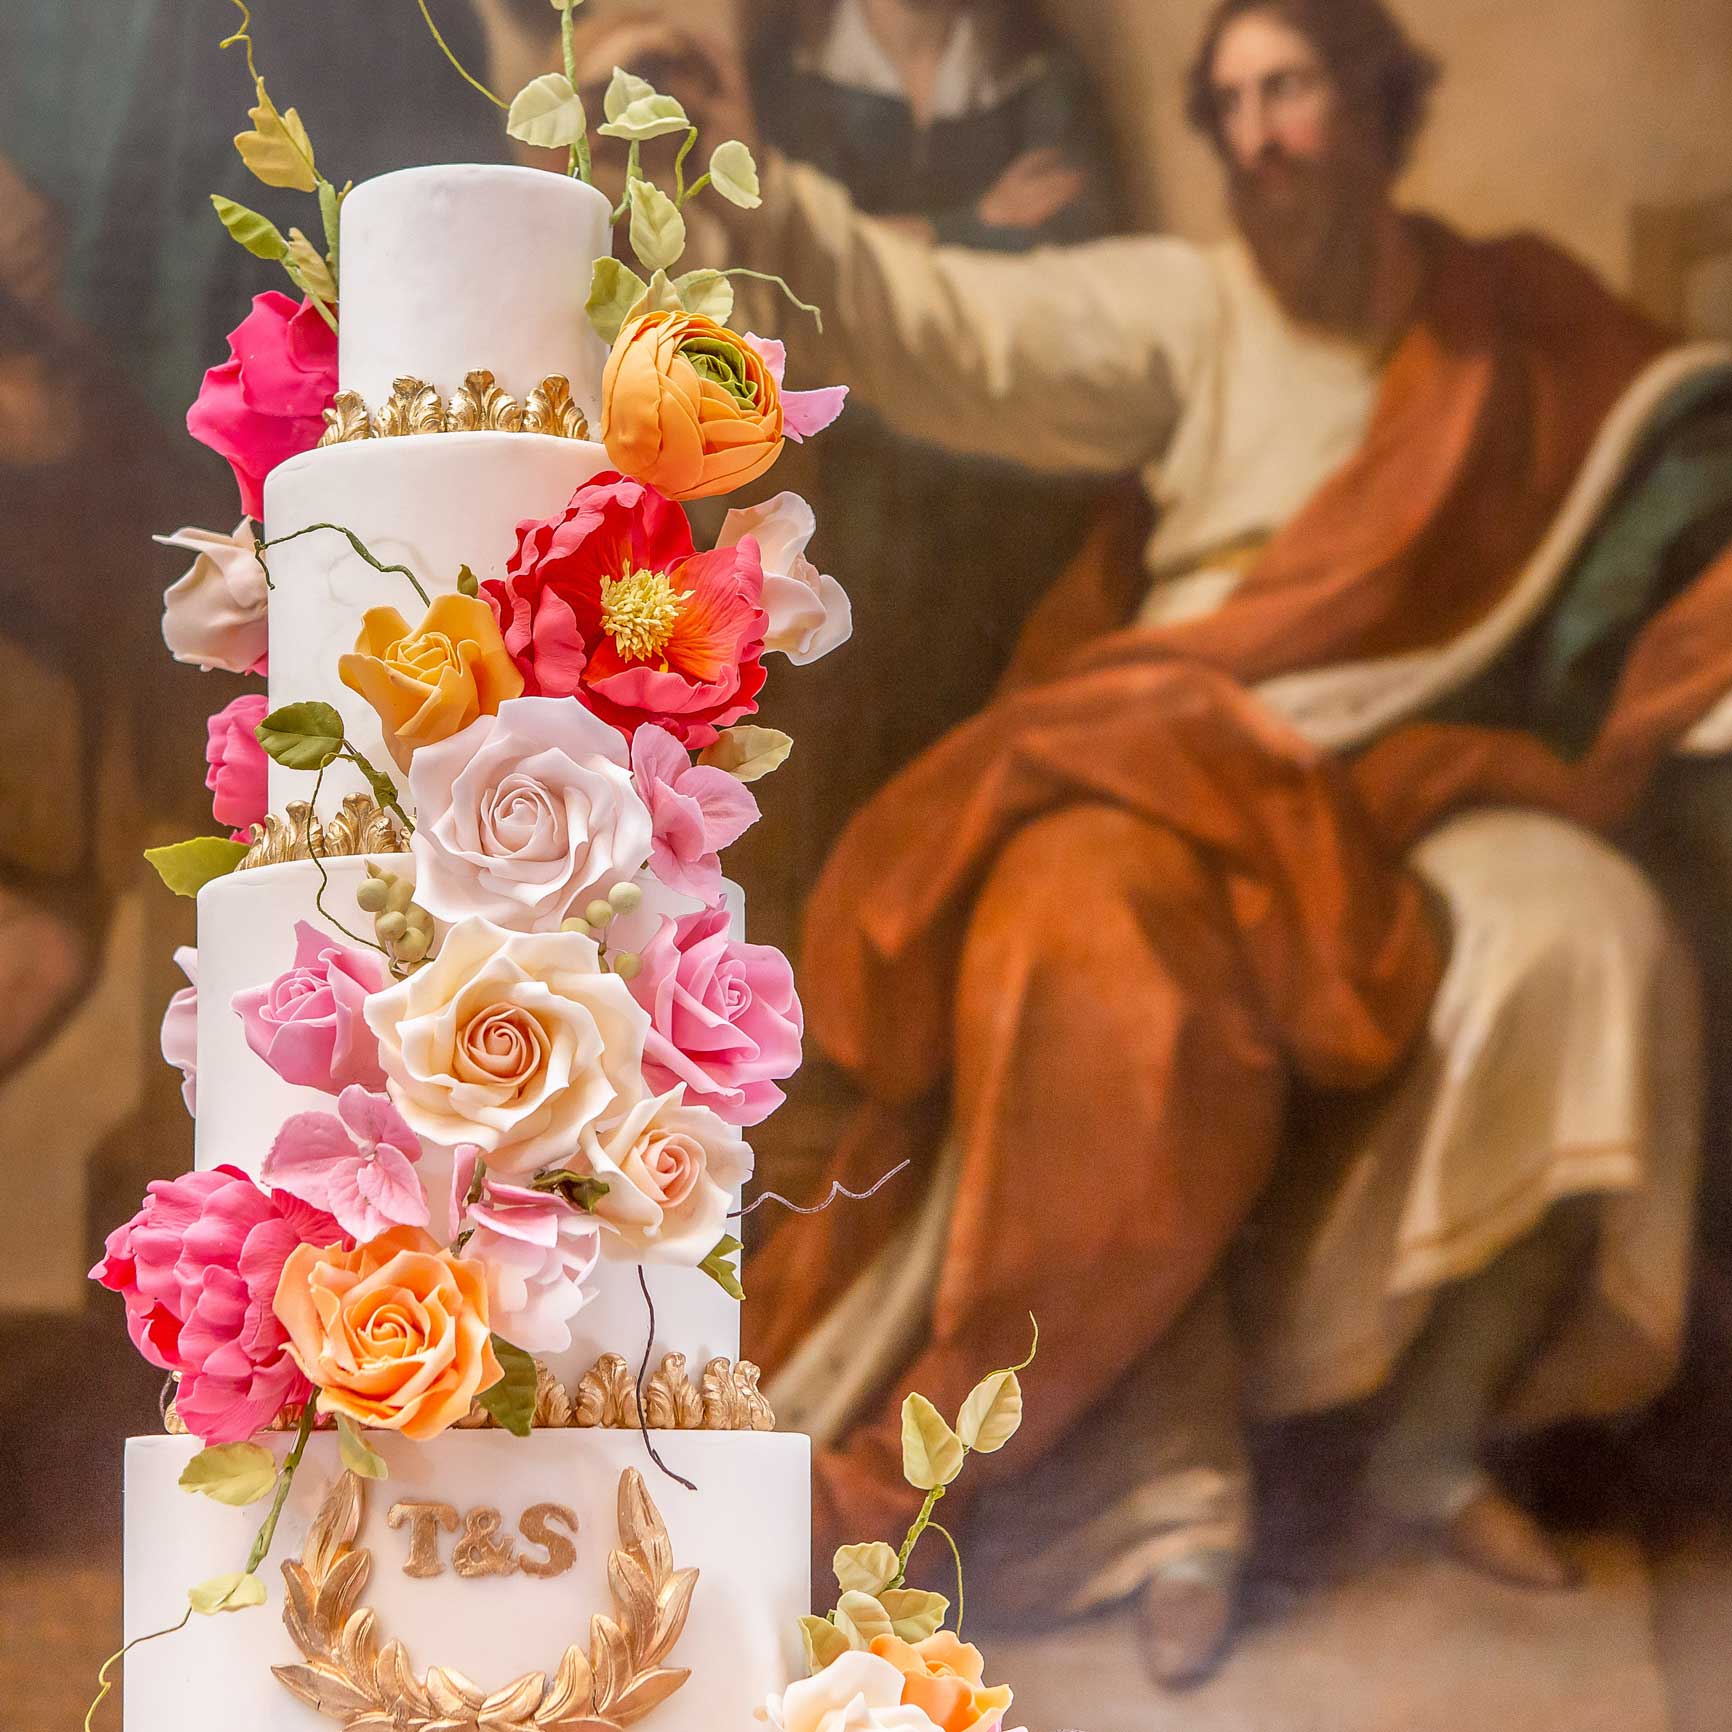 stationers-hall-wedding-cake2